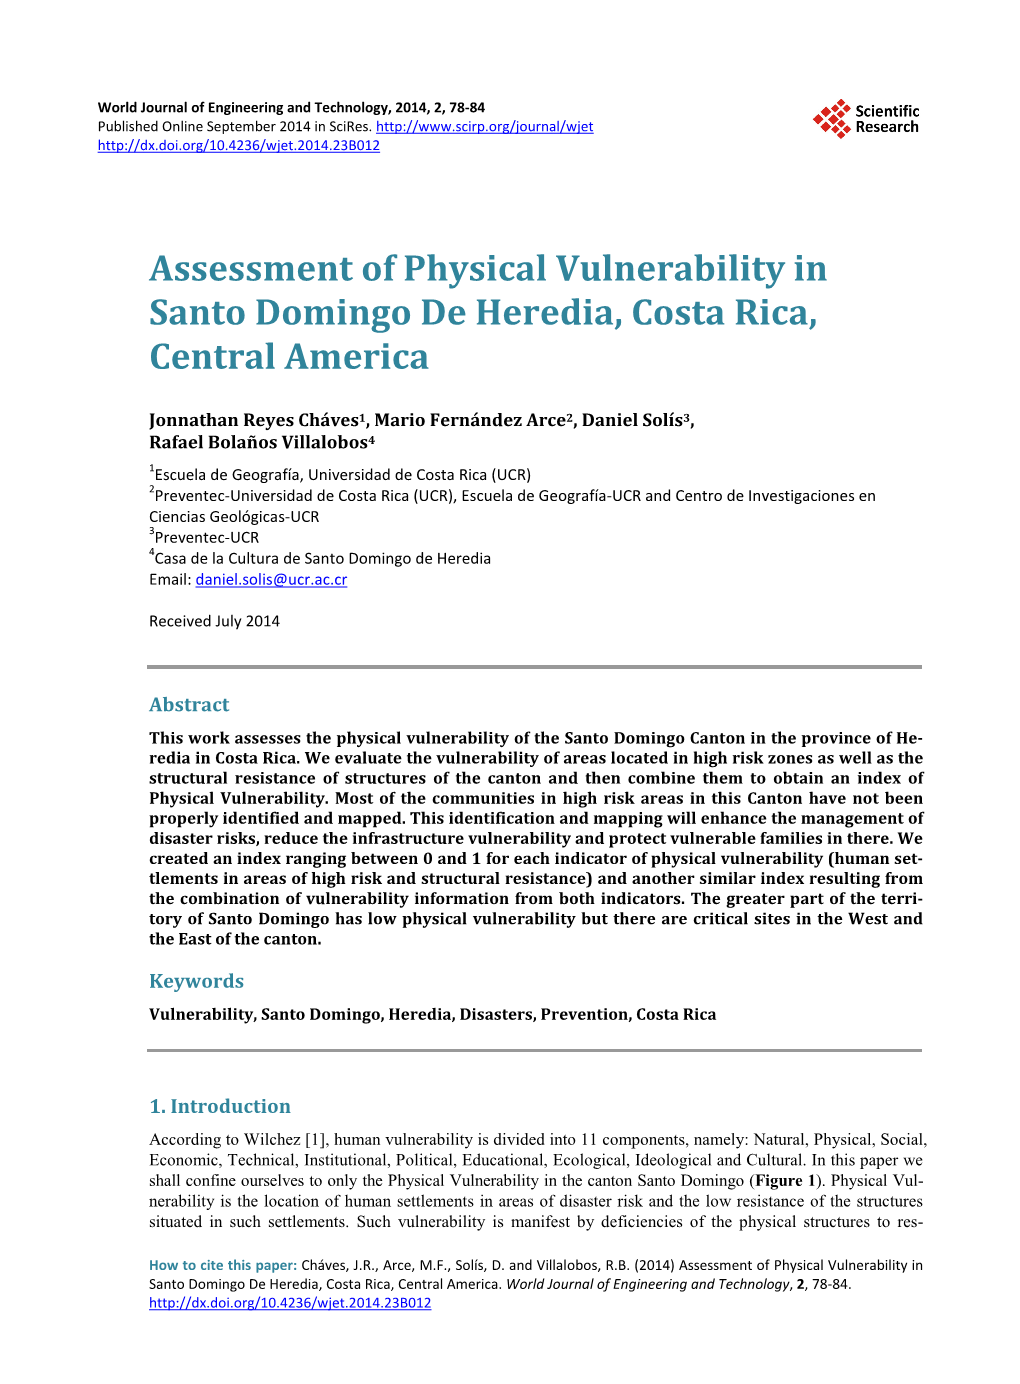 Assessment of Physical Vulnerability in Santo Domingo De Heredia, Costa Rica, Central America